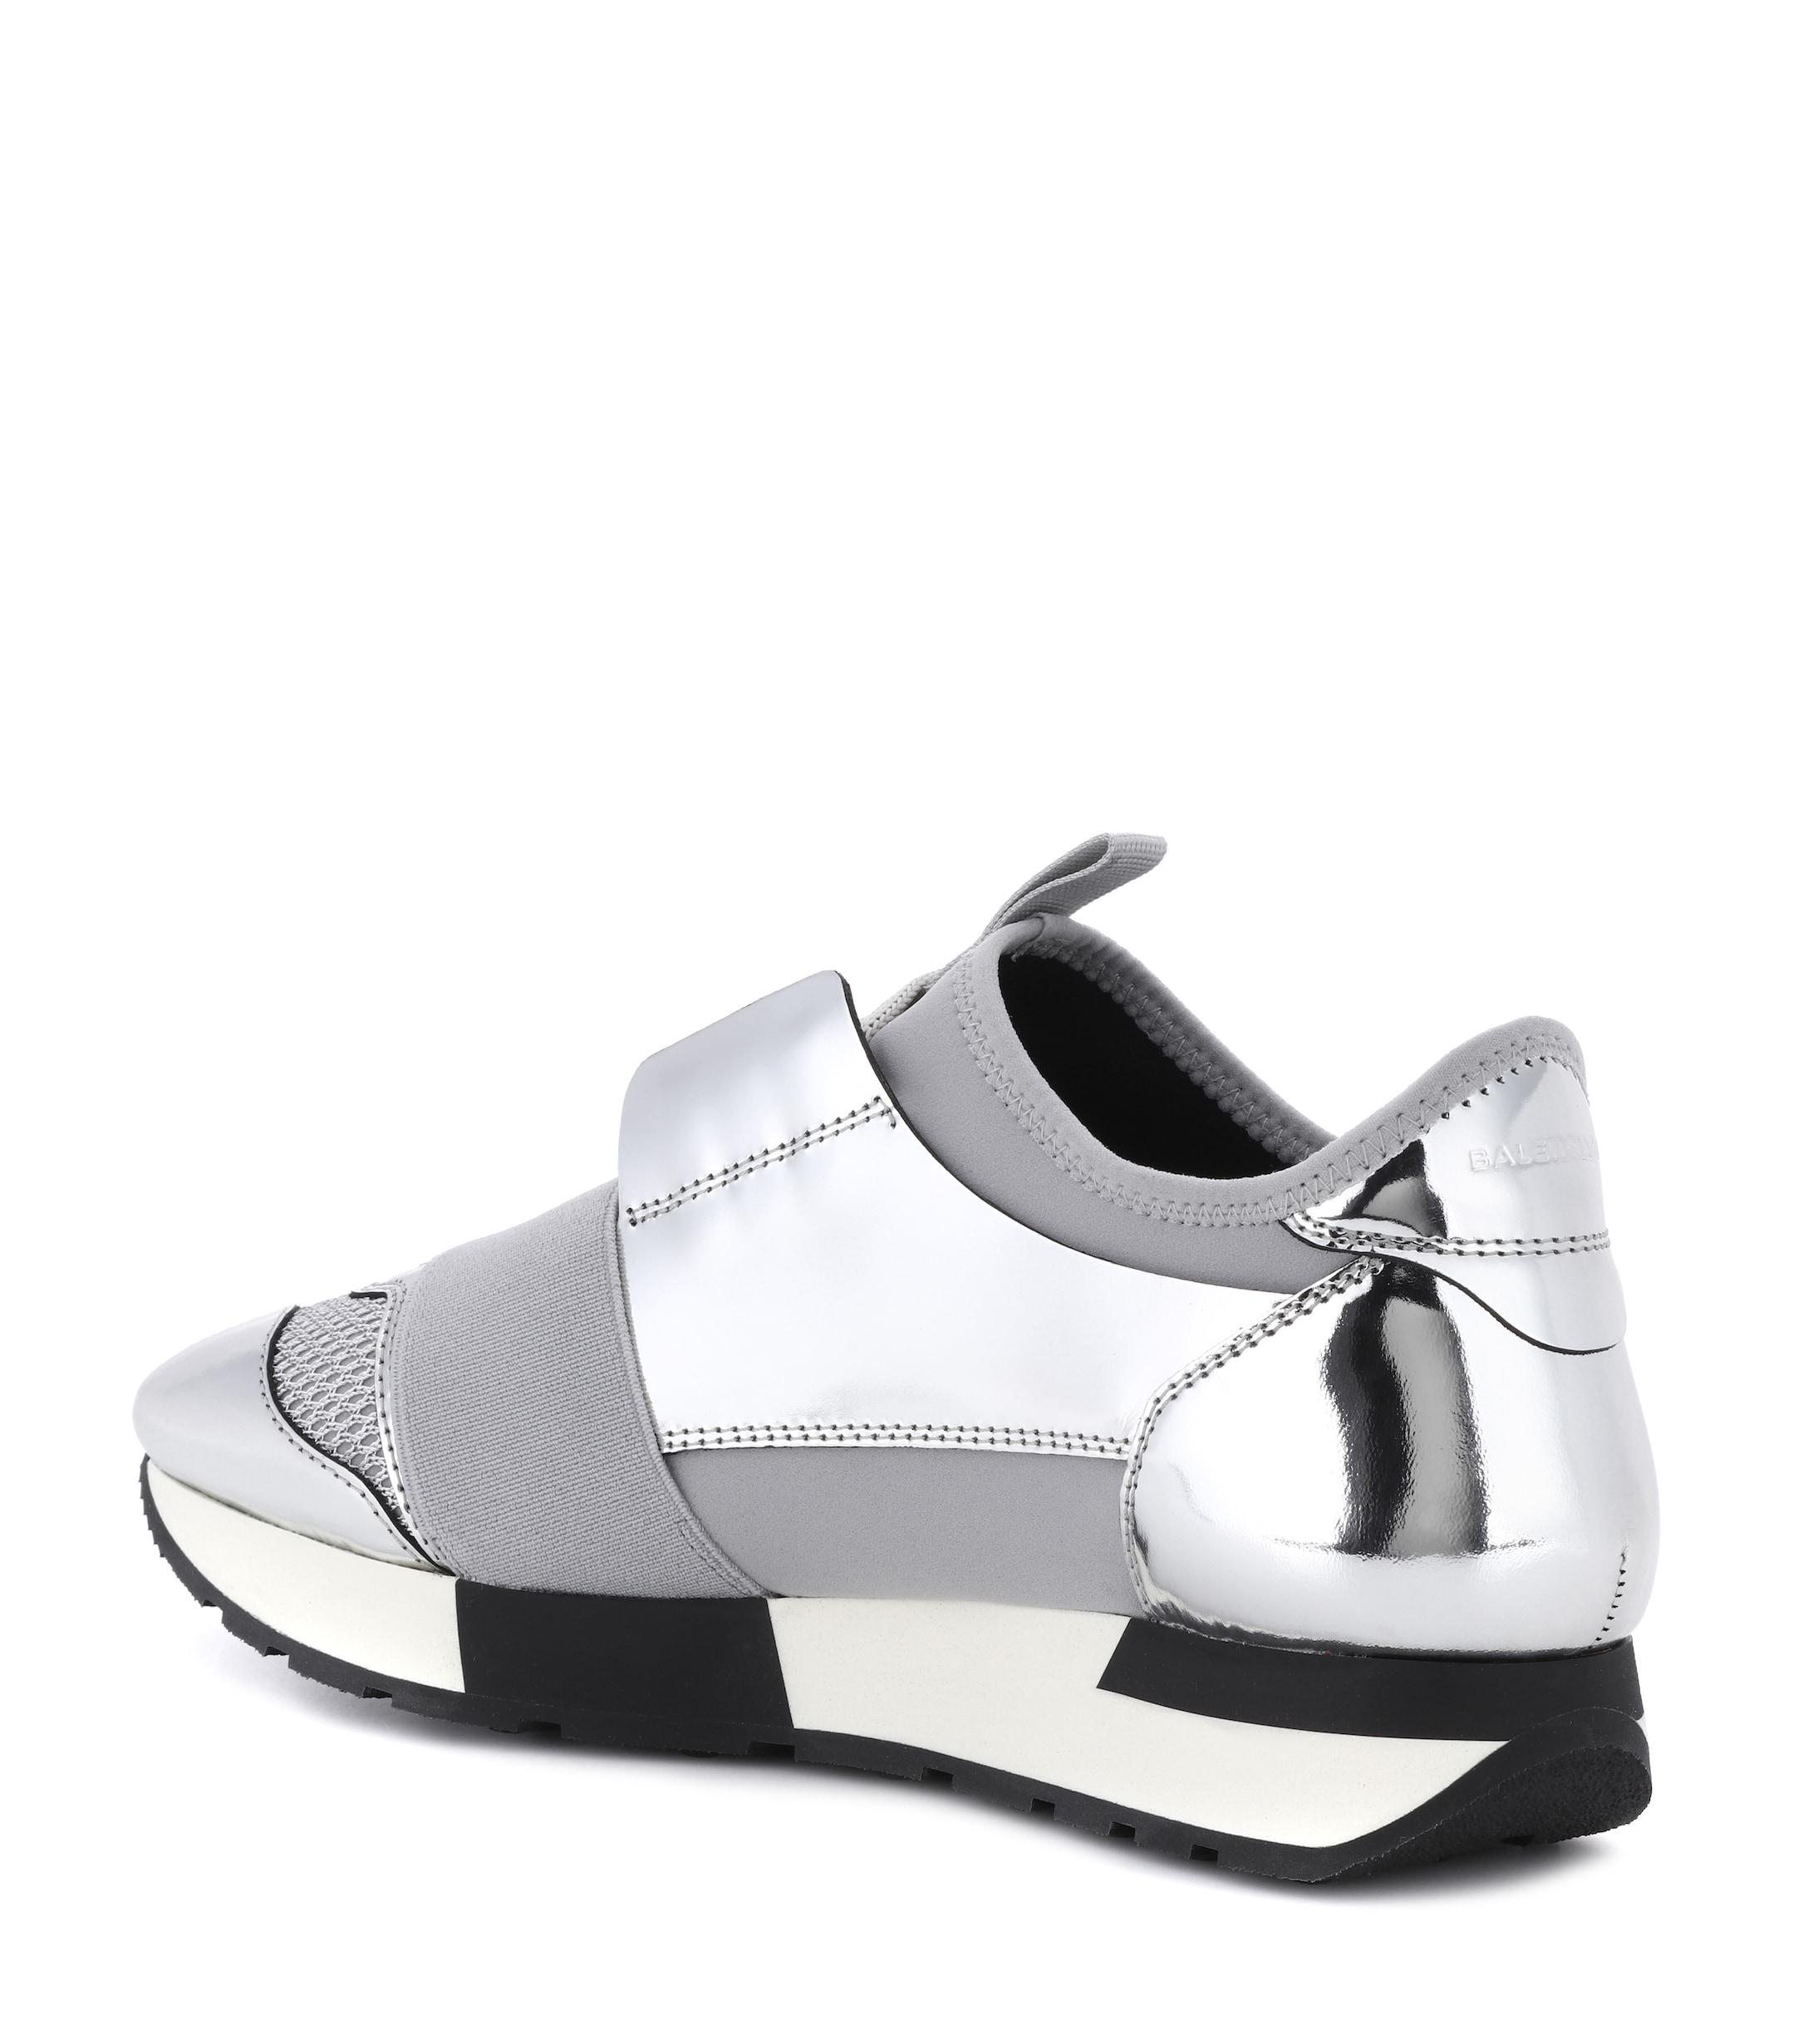 Balenciaga Race Runner Leather Sneakers in Silver (Metallic) | Lyst